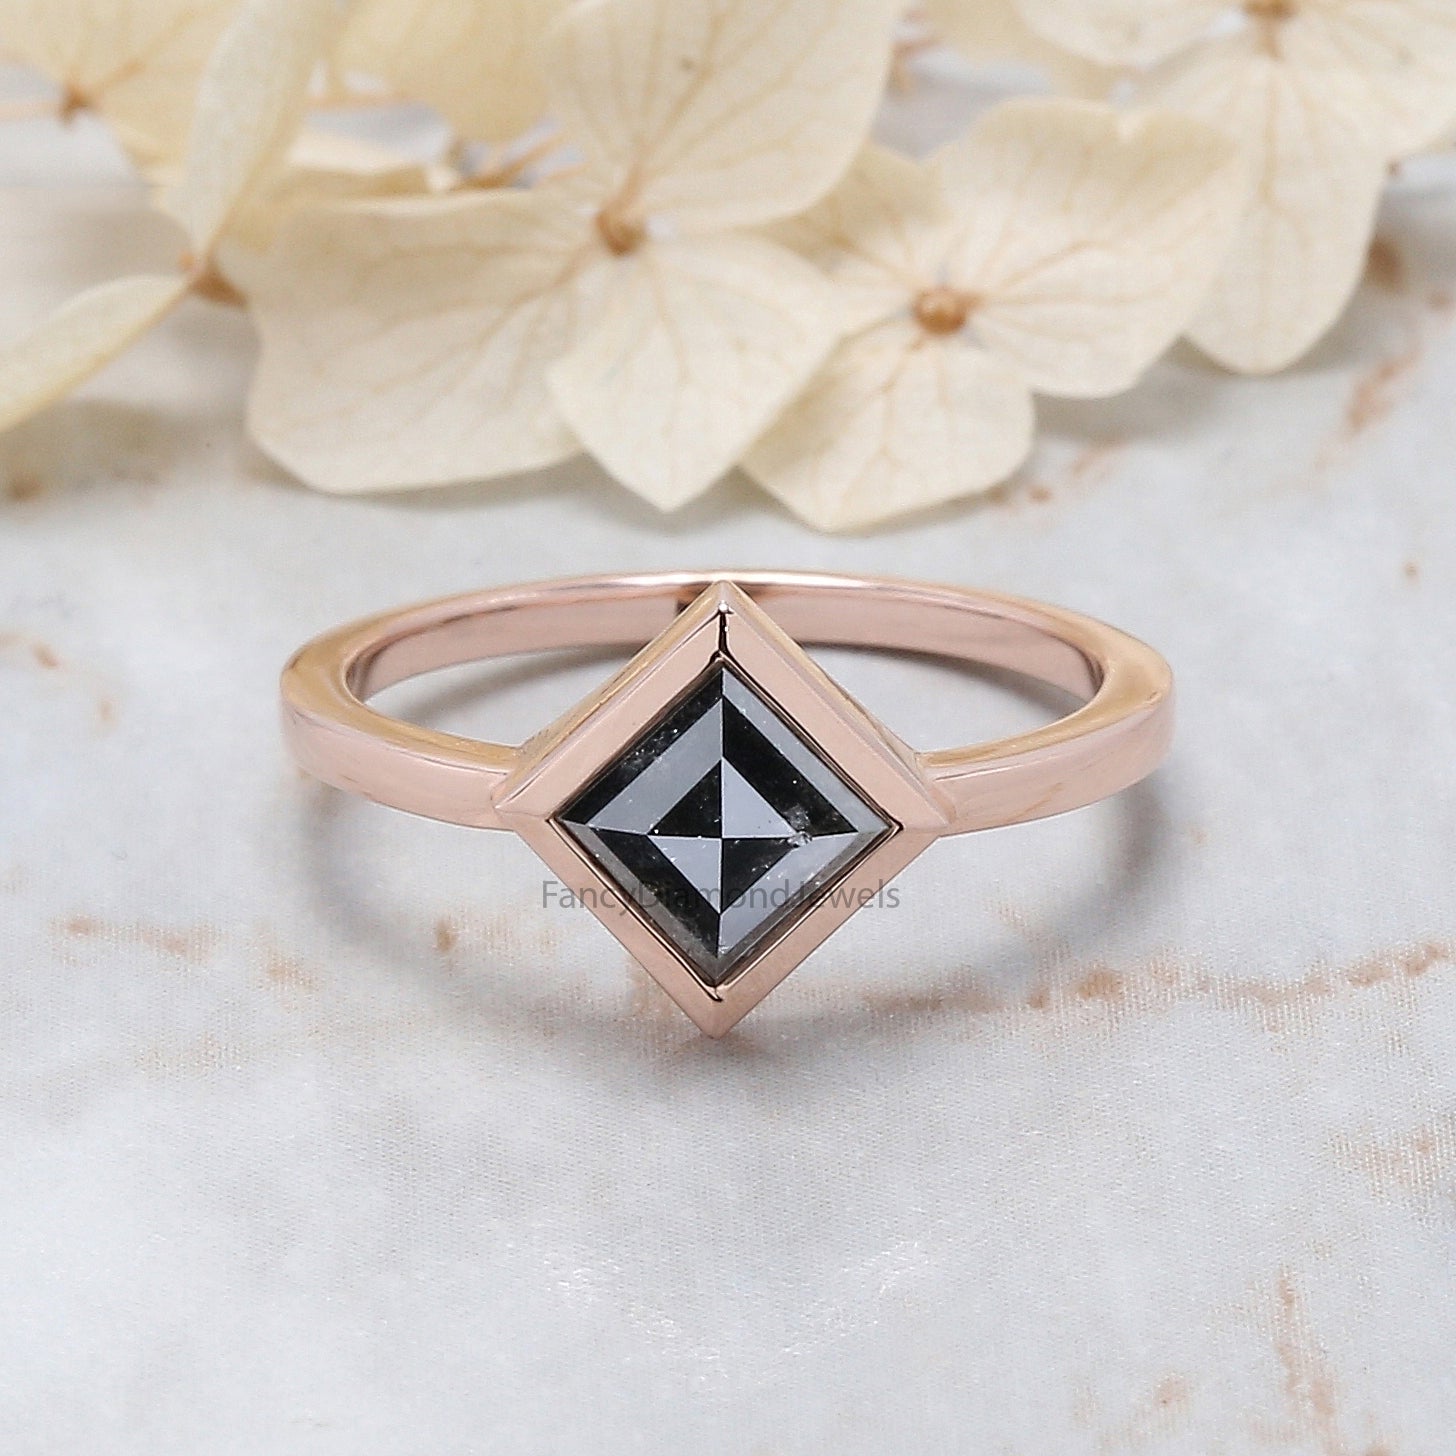 Shop Rose Gold Black Diamond Rings for Women | Angara